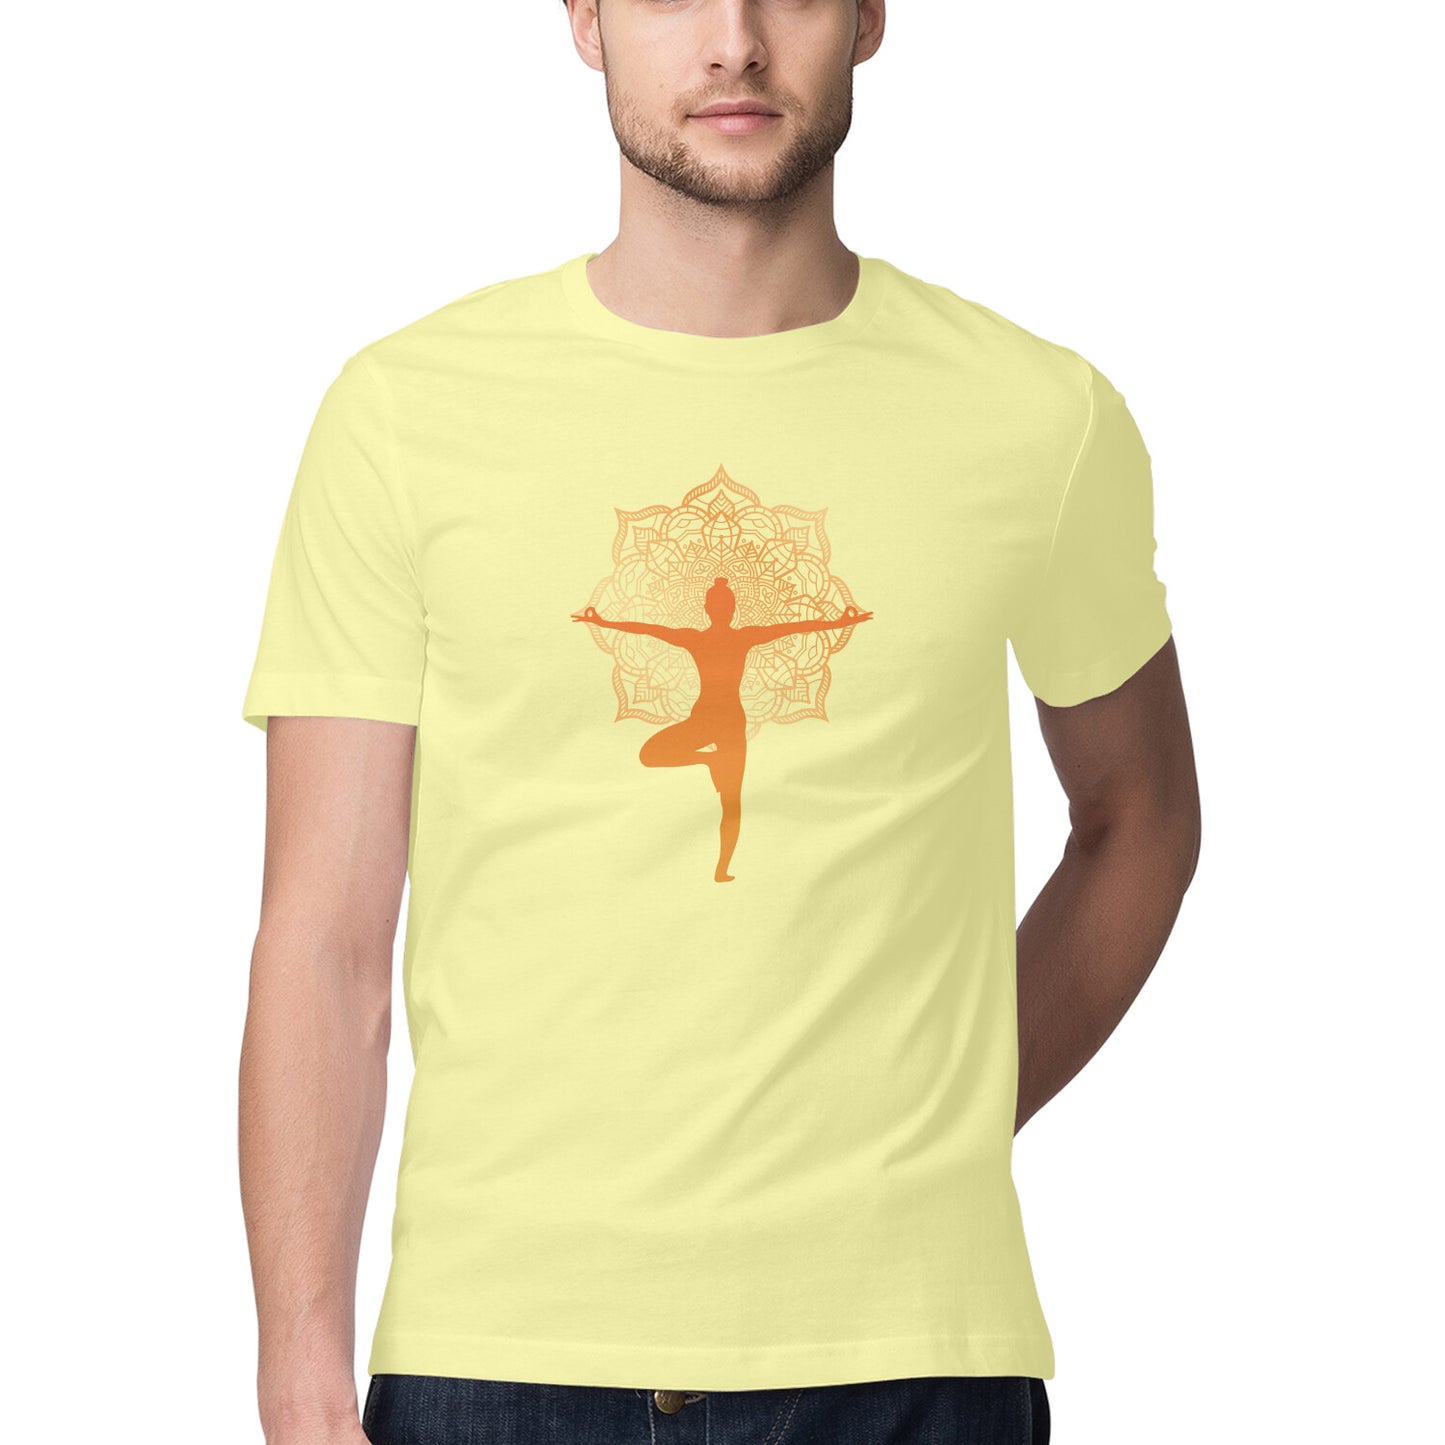 Yoga and Meditation 22 Printed Graphic T-Shirt